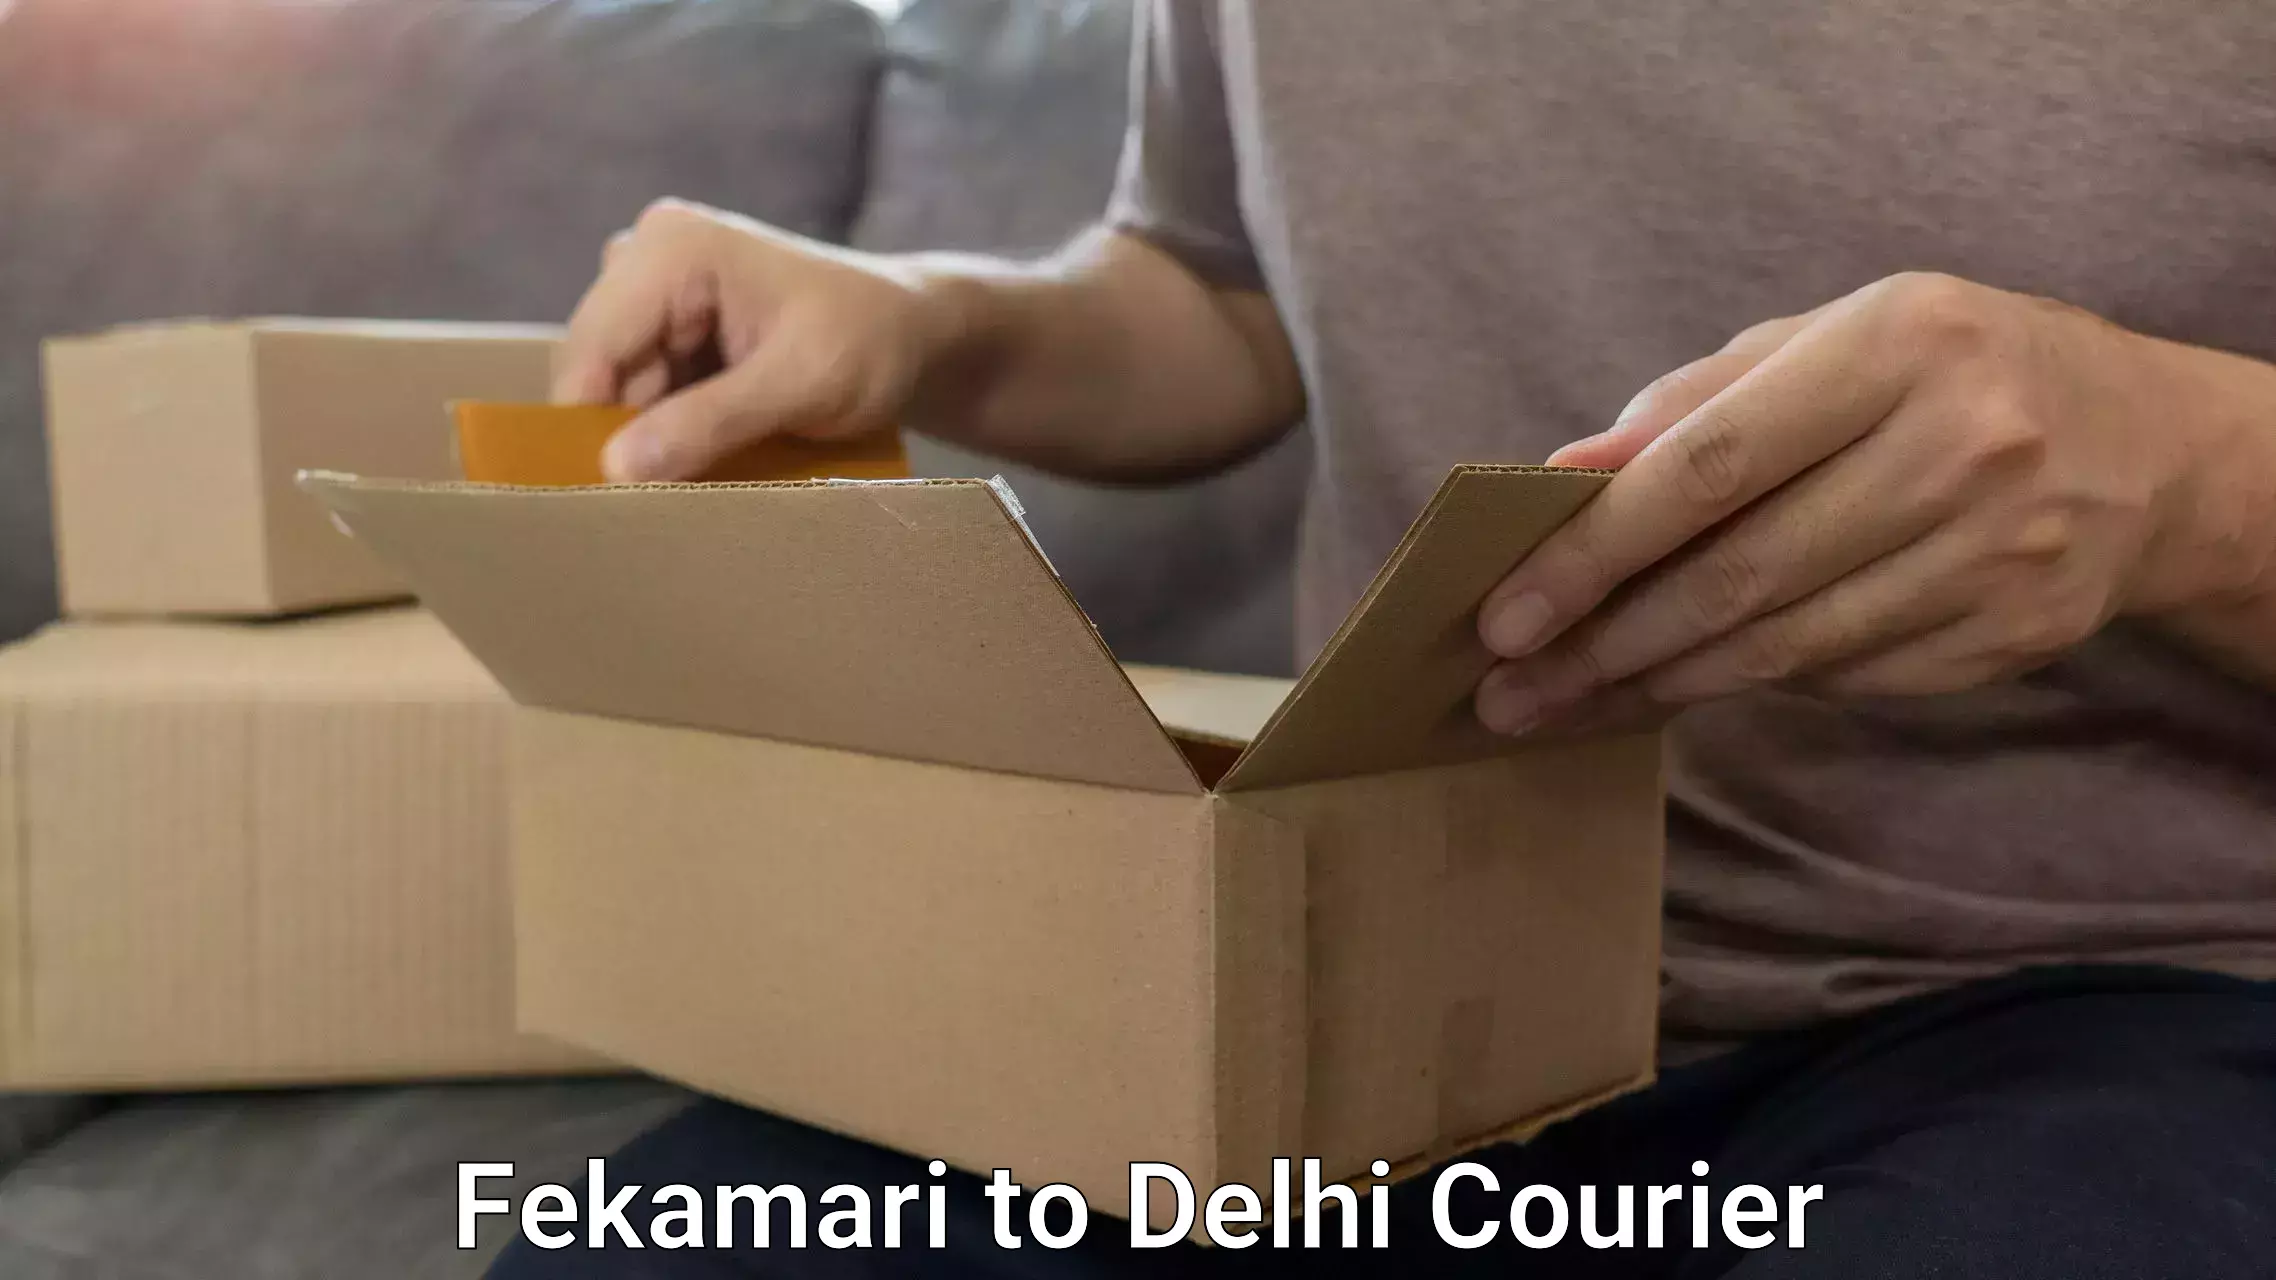 Baggage shipping service Fekamari to University of Delhi